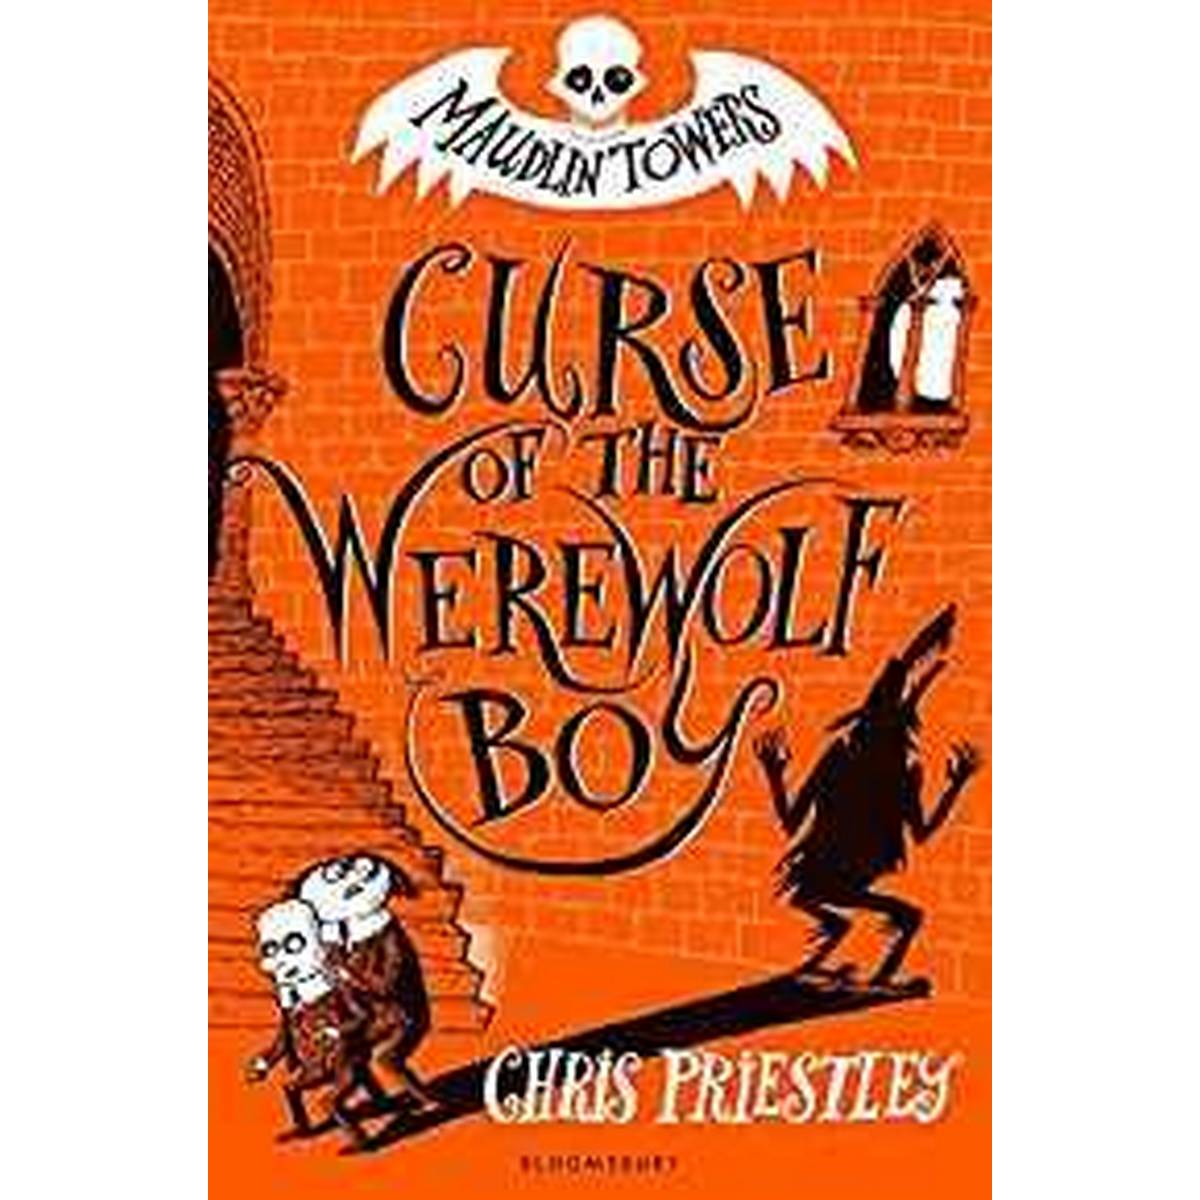 Curse of the Werewolf Boy (Maudlin Towers)